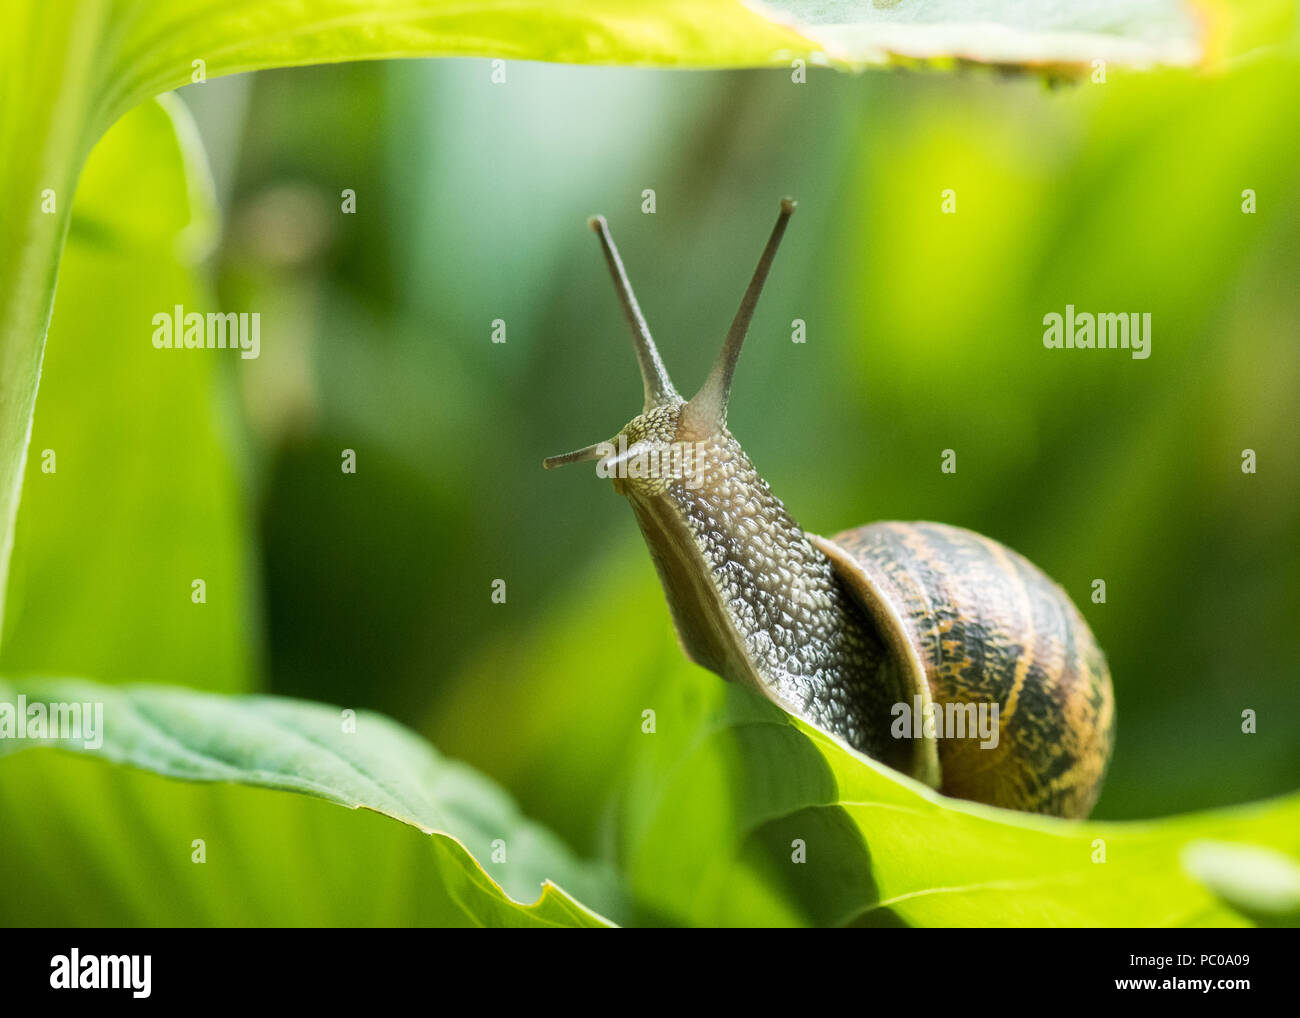 Helix aspersa - common garden snail on green hosta leaf reaching upwards - uk Stock Photo